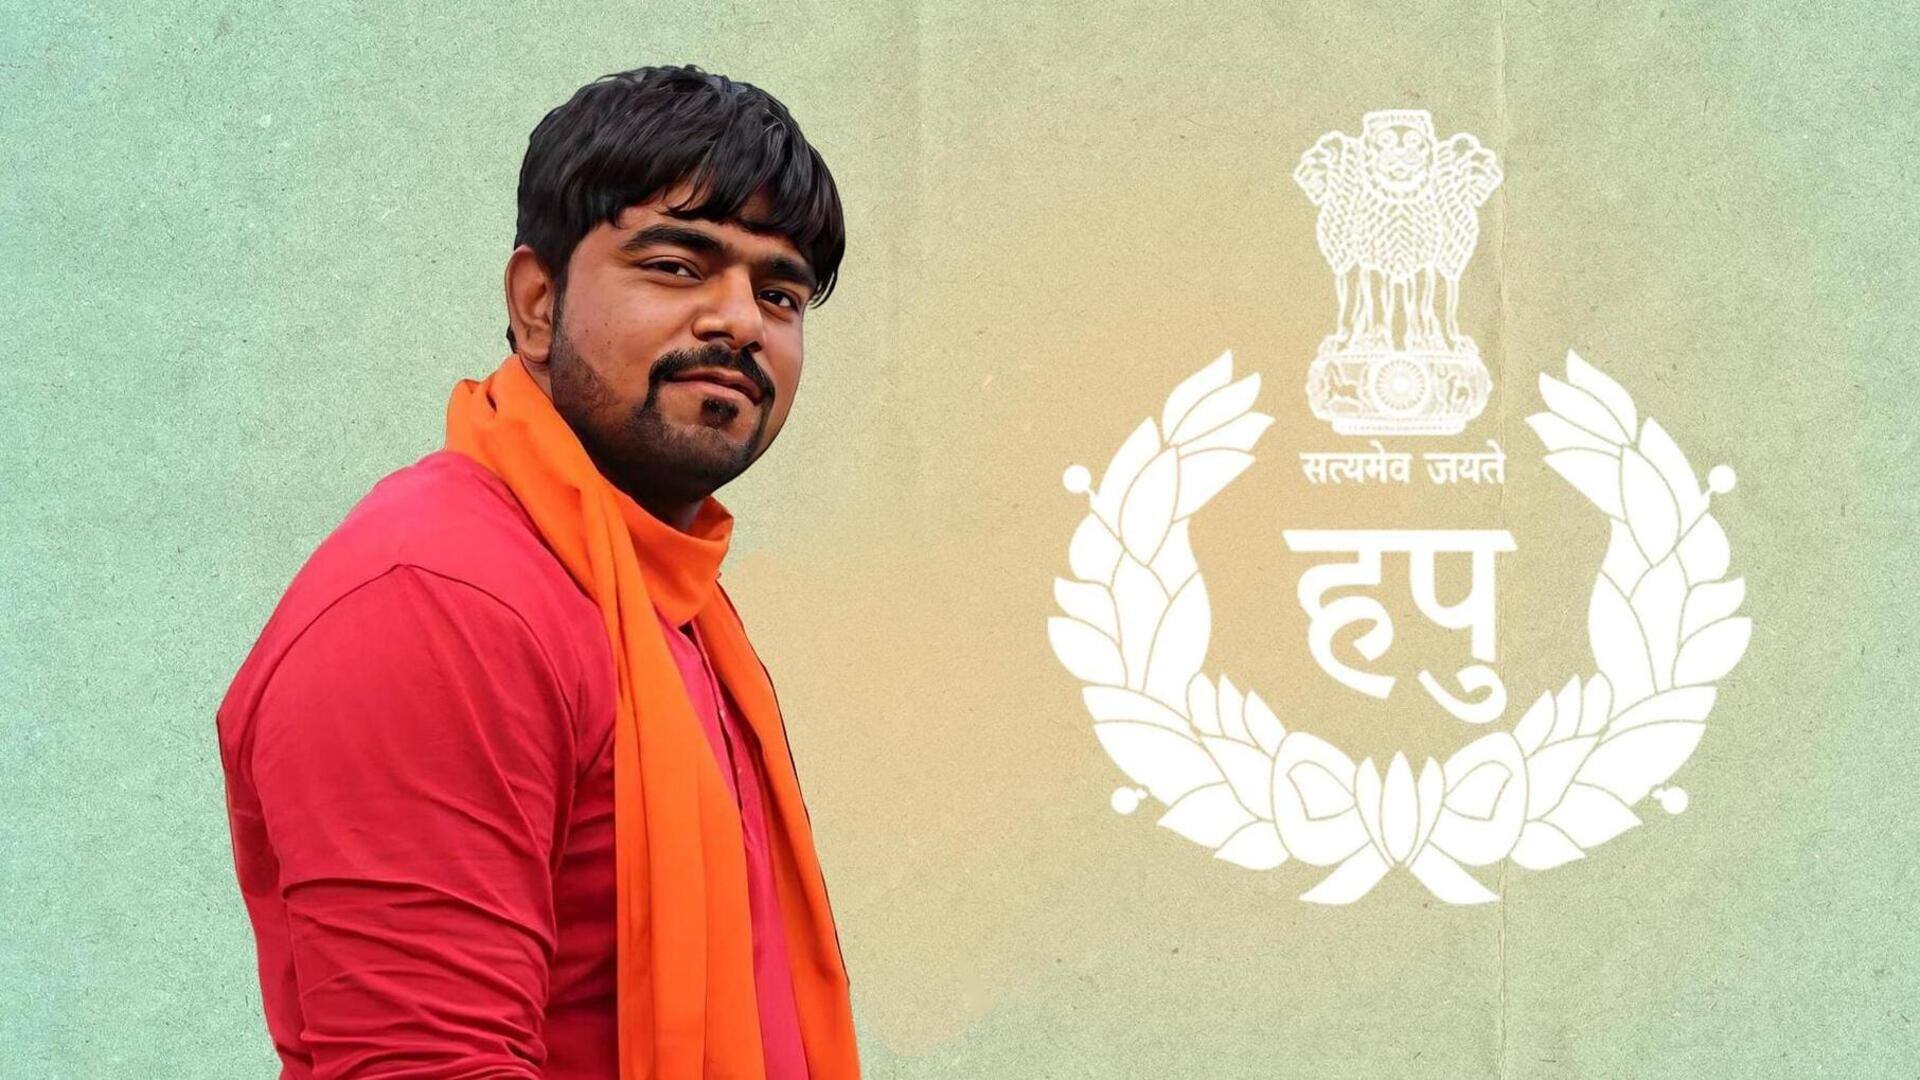 राजस्थान से हरियाणा लाया जाएगा मोनू मानेसर, पुलिस को मिला नया पेशी वारंट